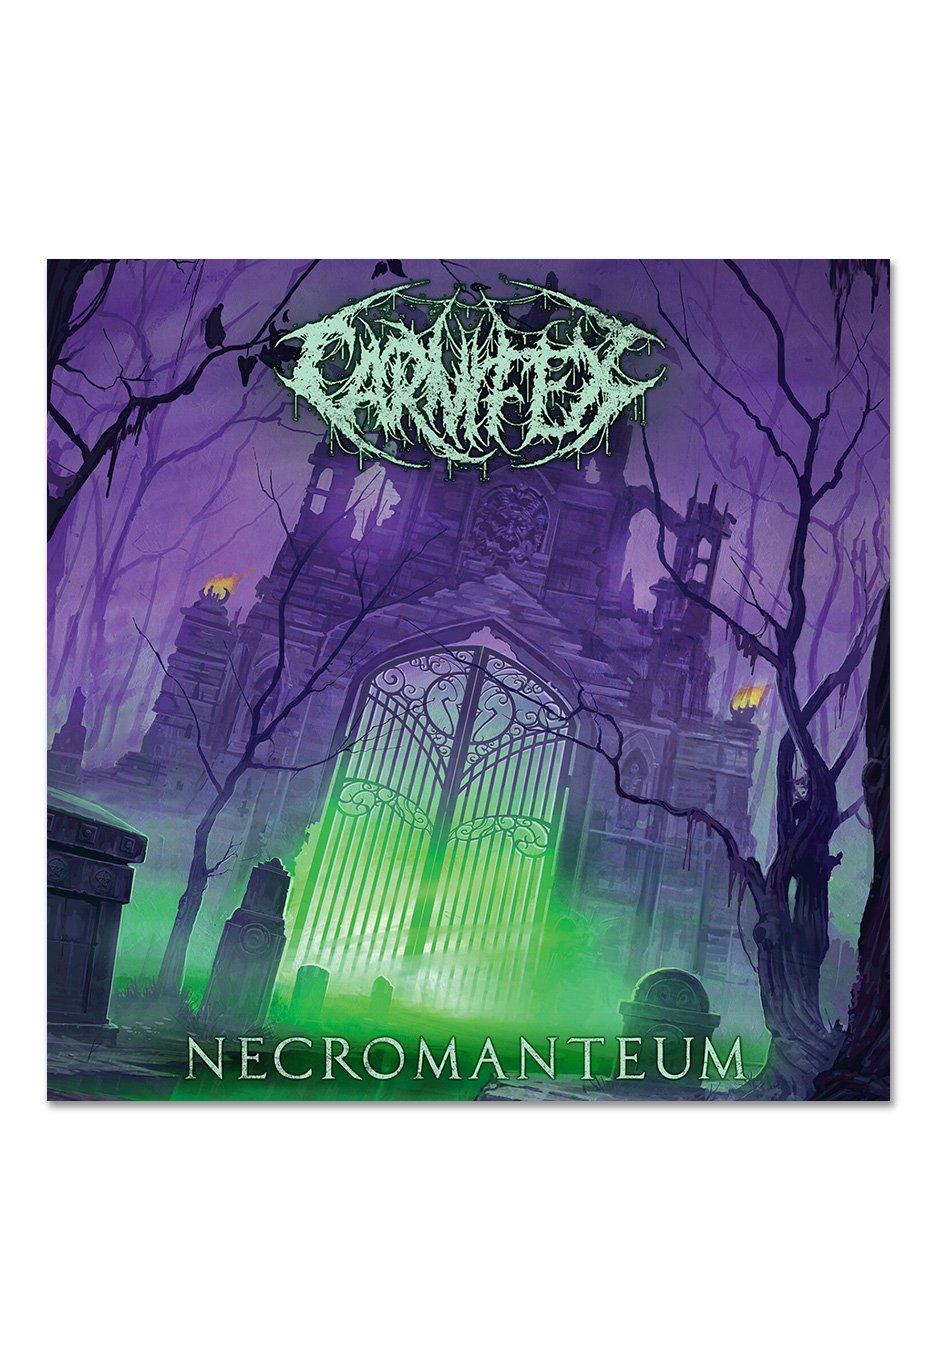 Carnifex - Necromanteum - CD